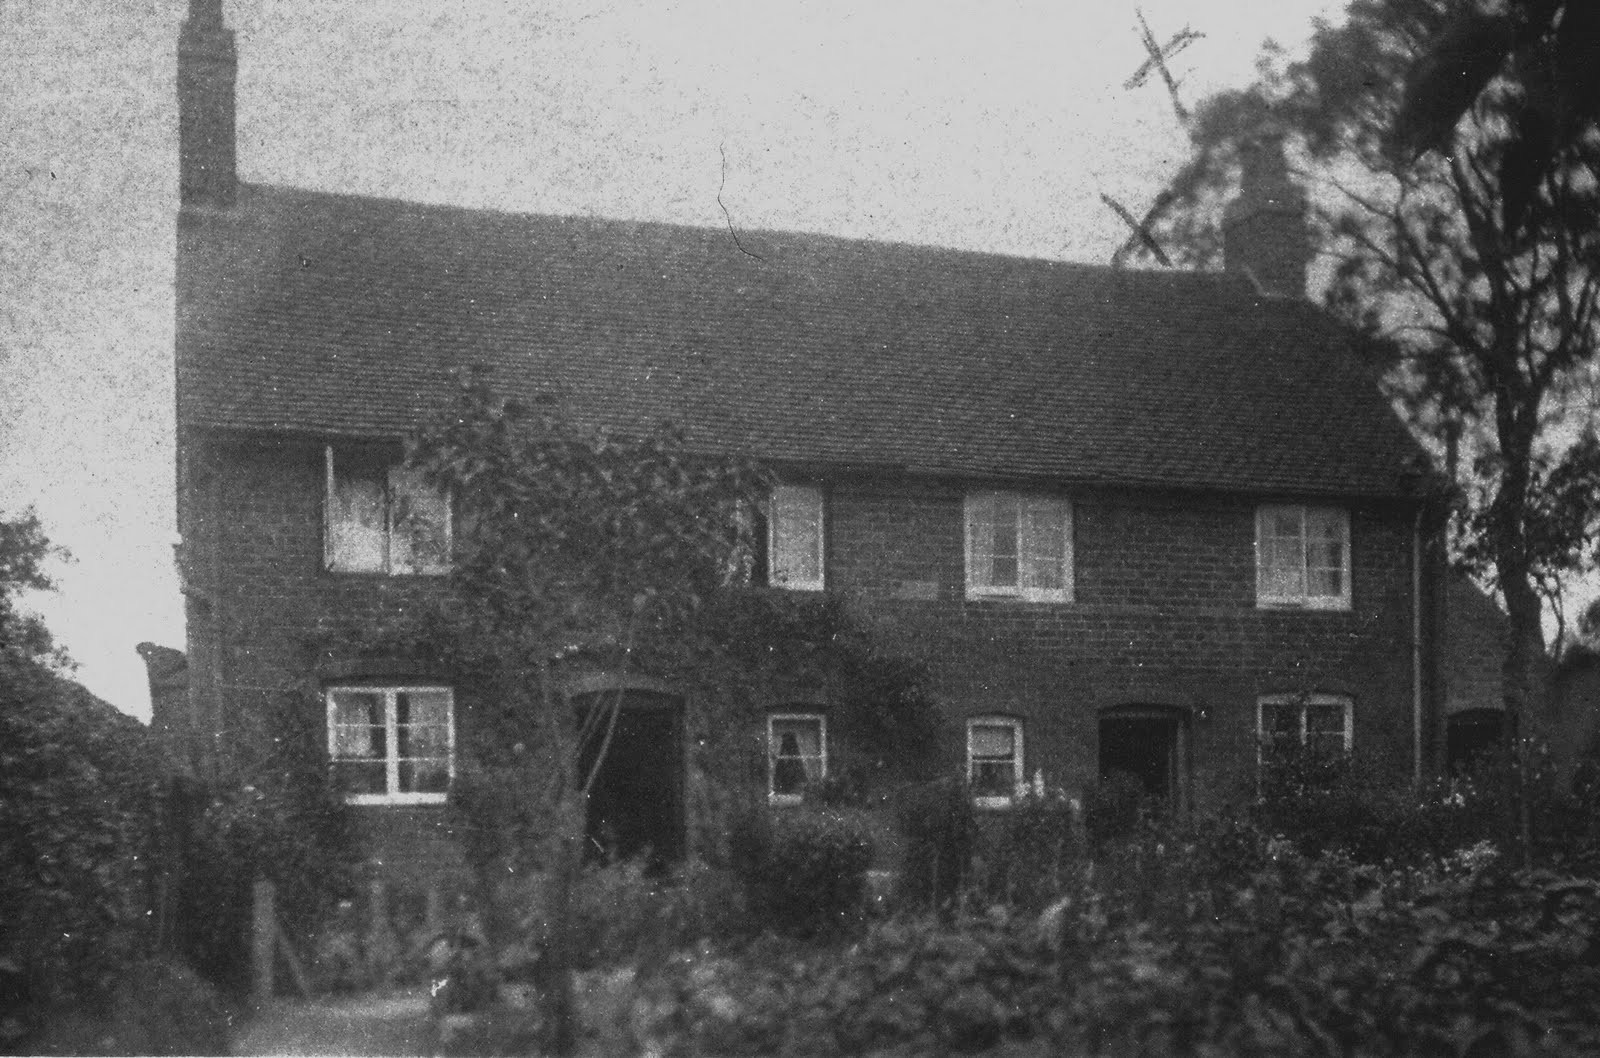 Crofts Cottages; location uncertain.